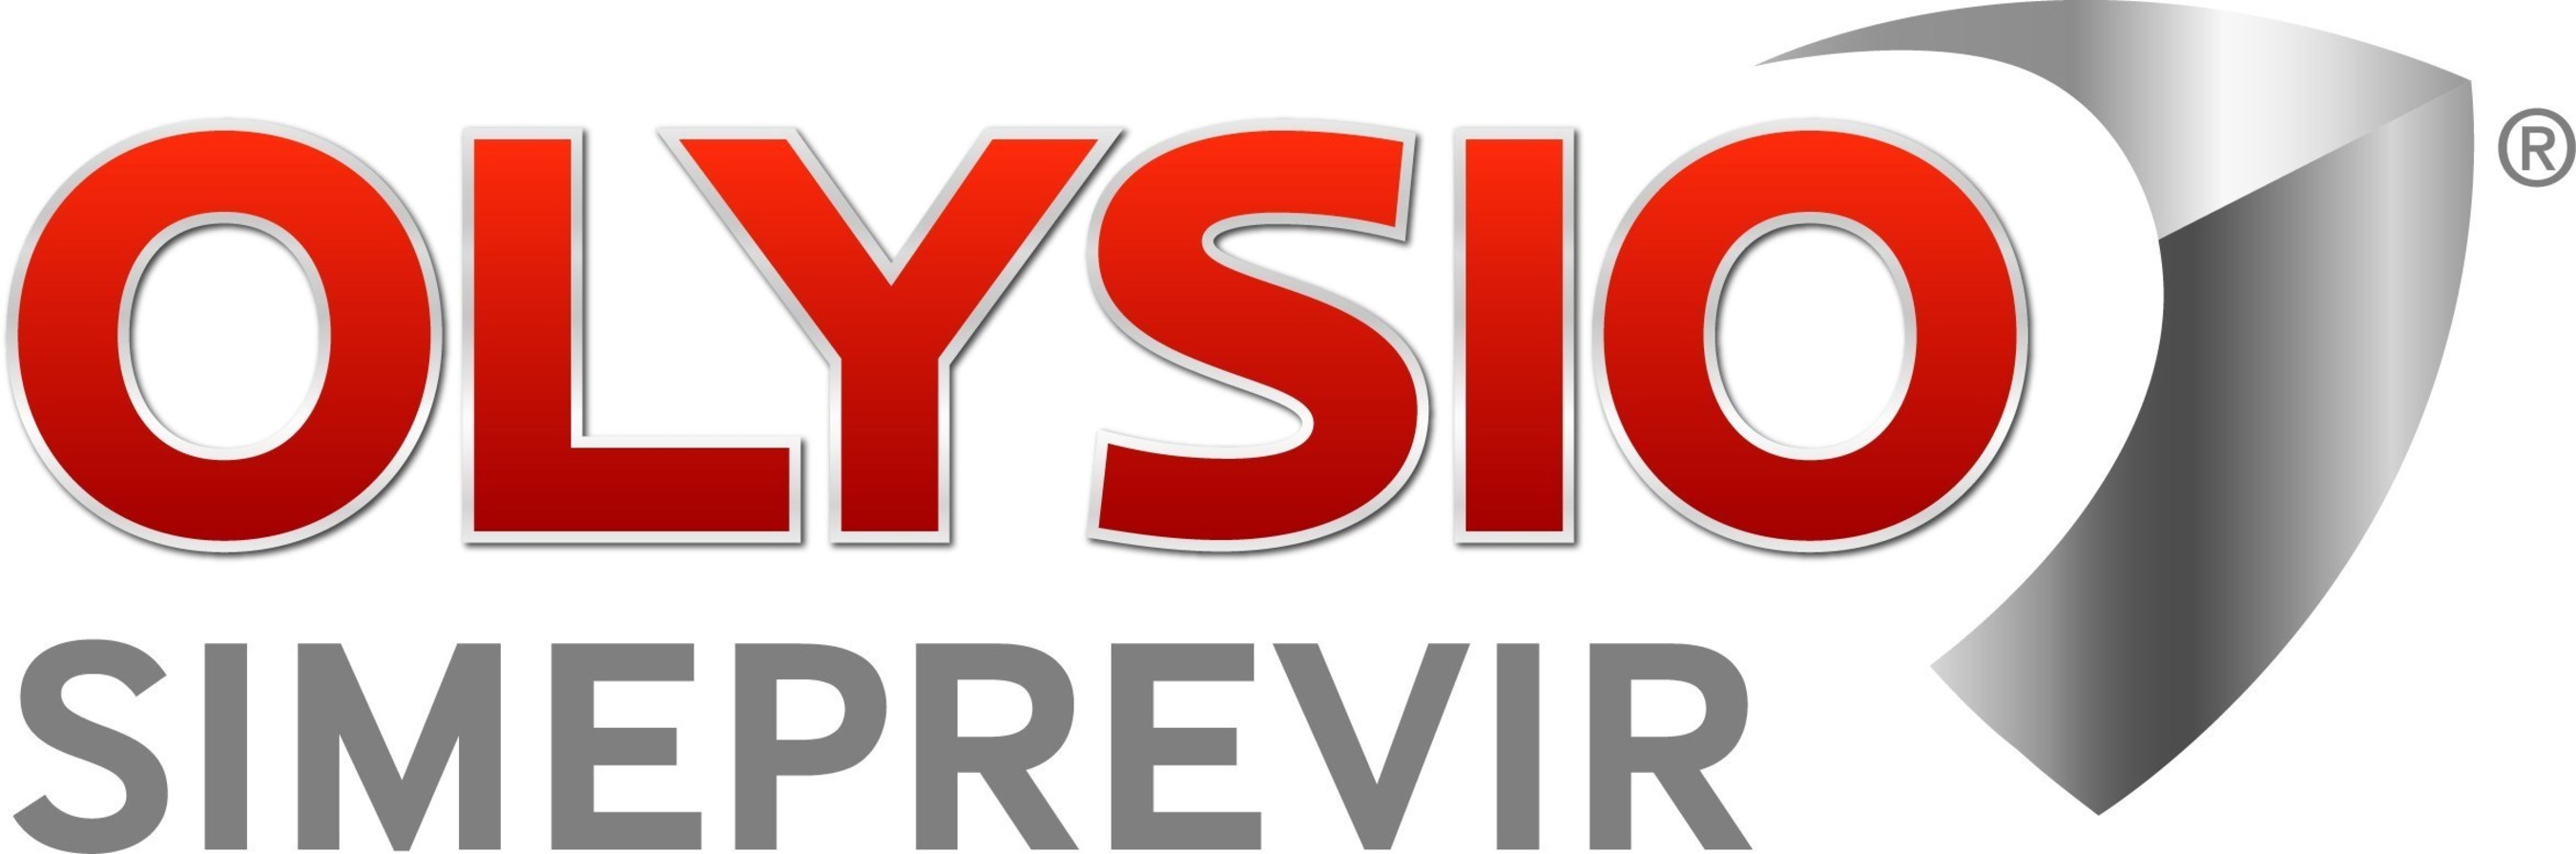 OLYSIO(R) (simeprevir) Logo